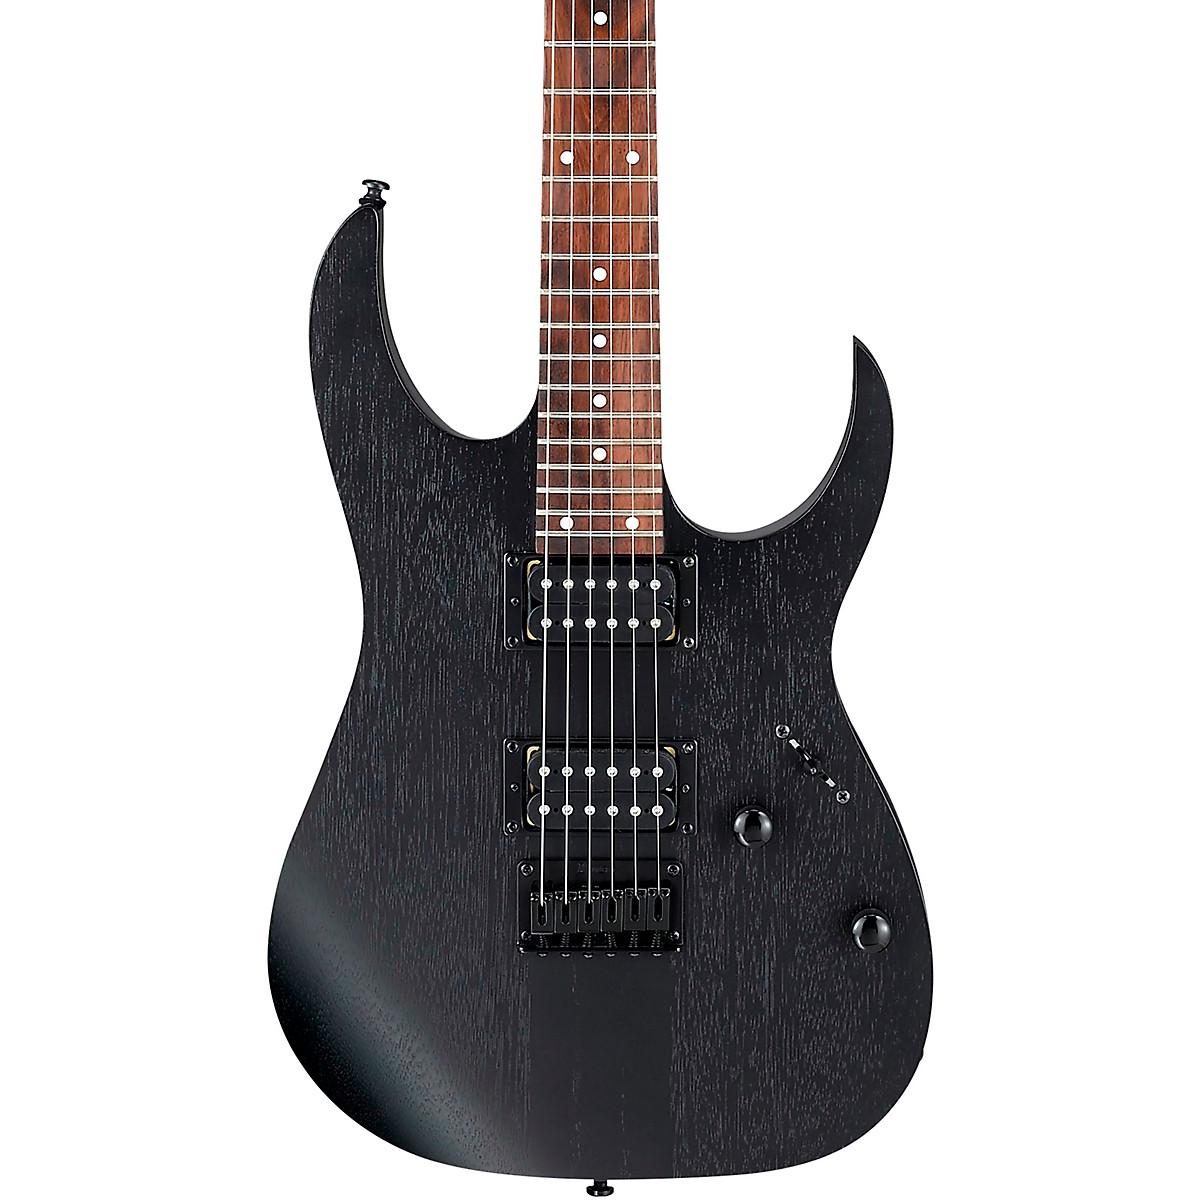 Ibañez - Guitarra Eléctrica RG, Color: Negra Mate Mod.RGRT421-WK_224